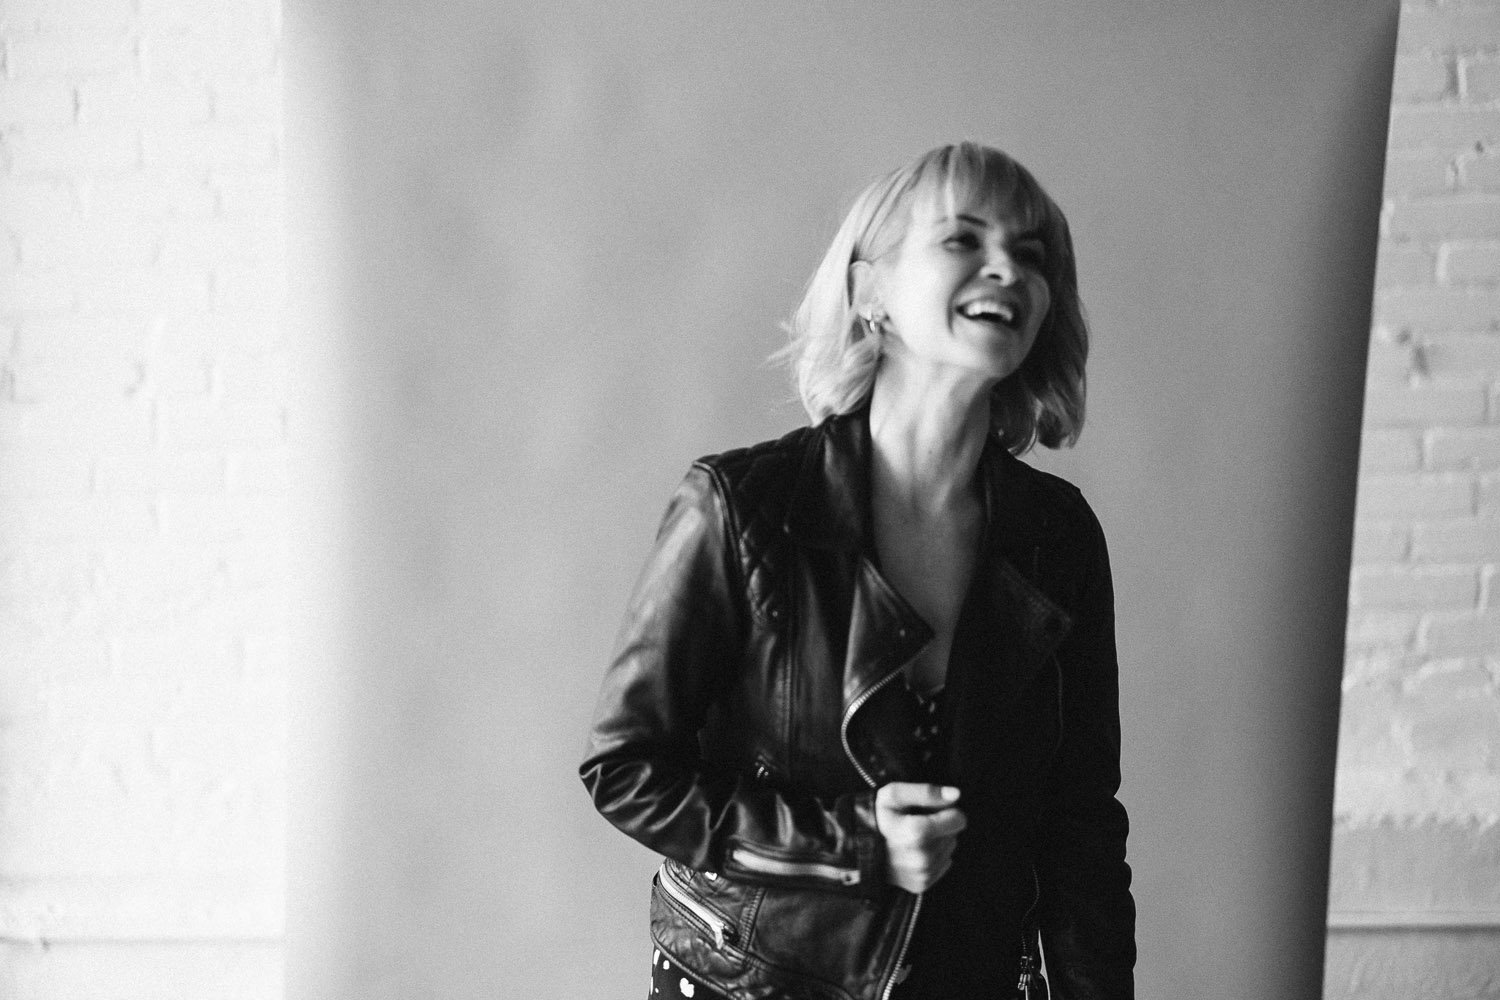 laughing-blonde-woman-leather-jacket-monochrome-branding-photographer-autumn-skye.jpg